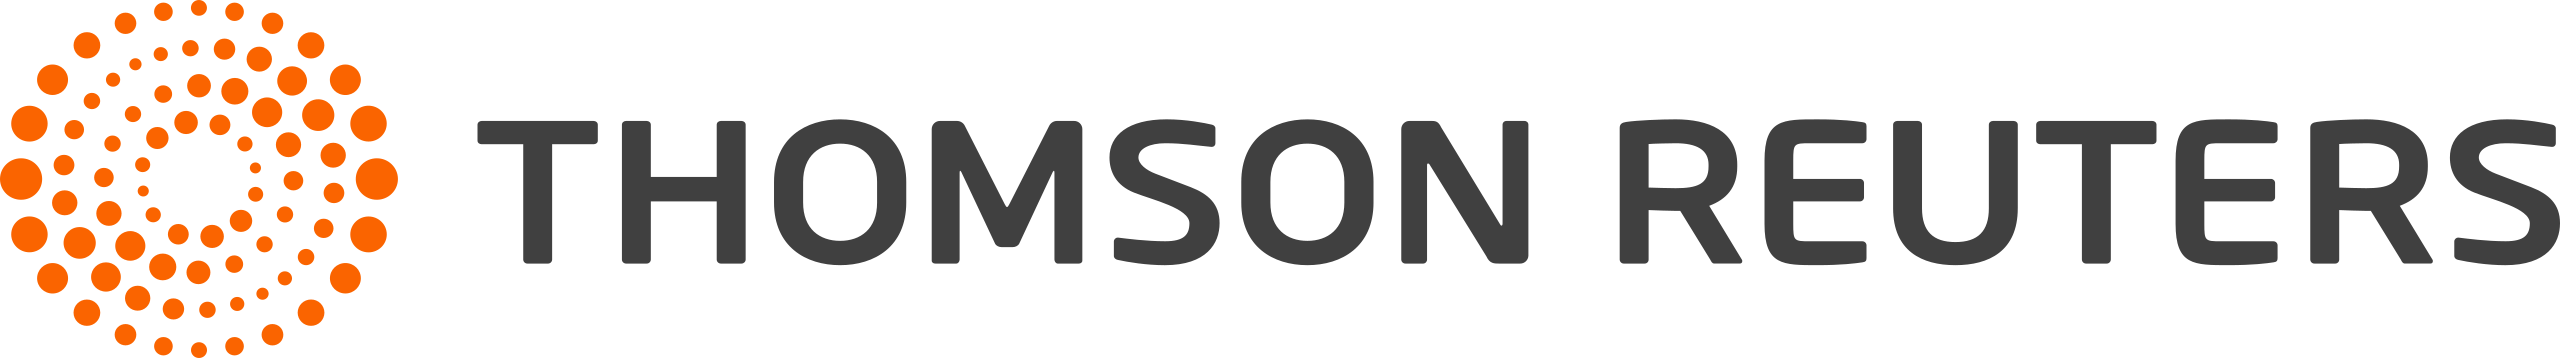 Файл:Thomson Reuters logo.svg — Википедия